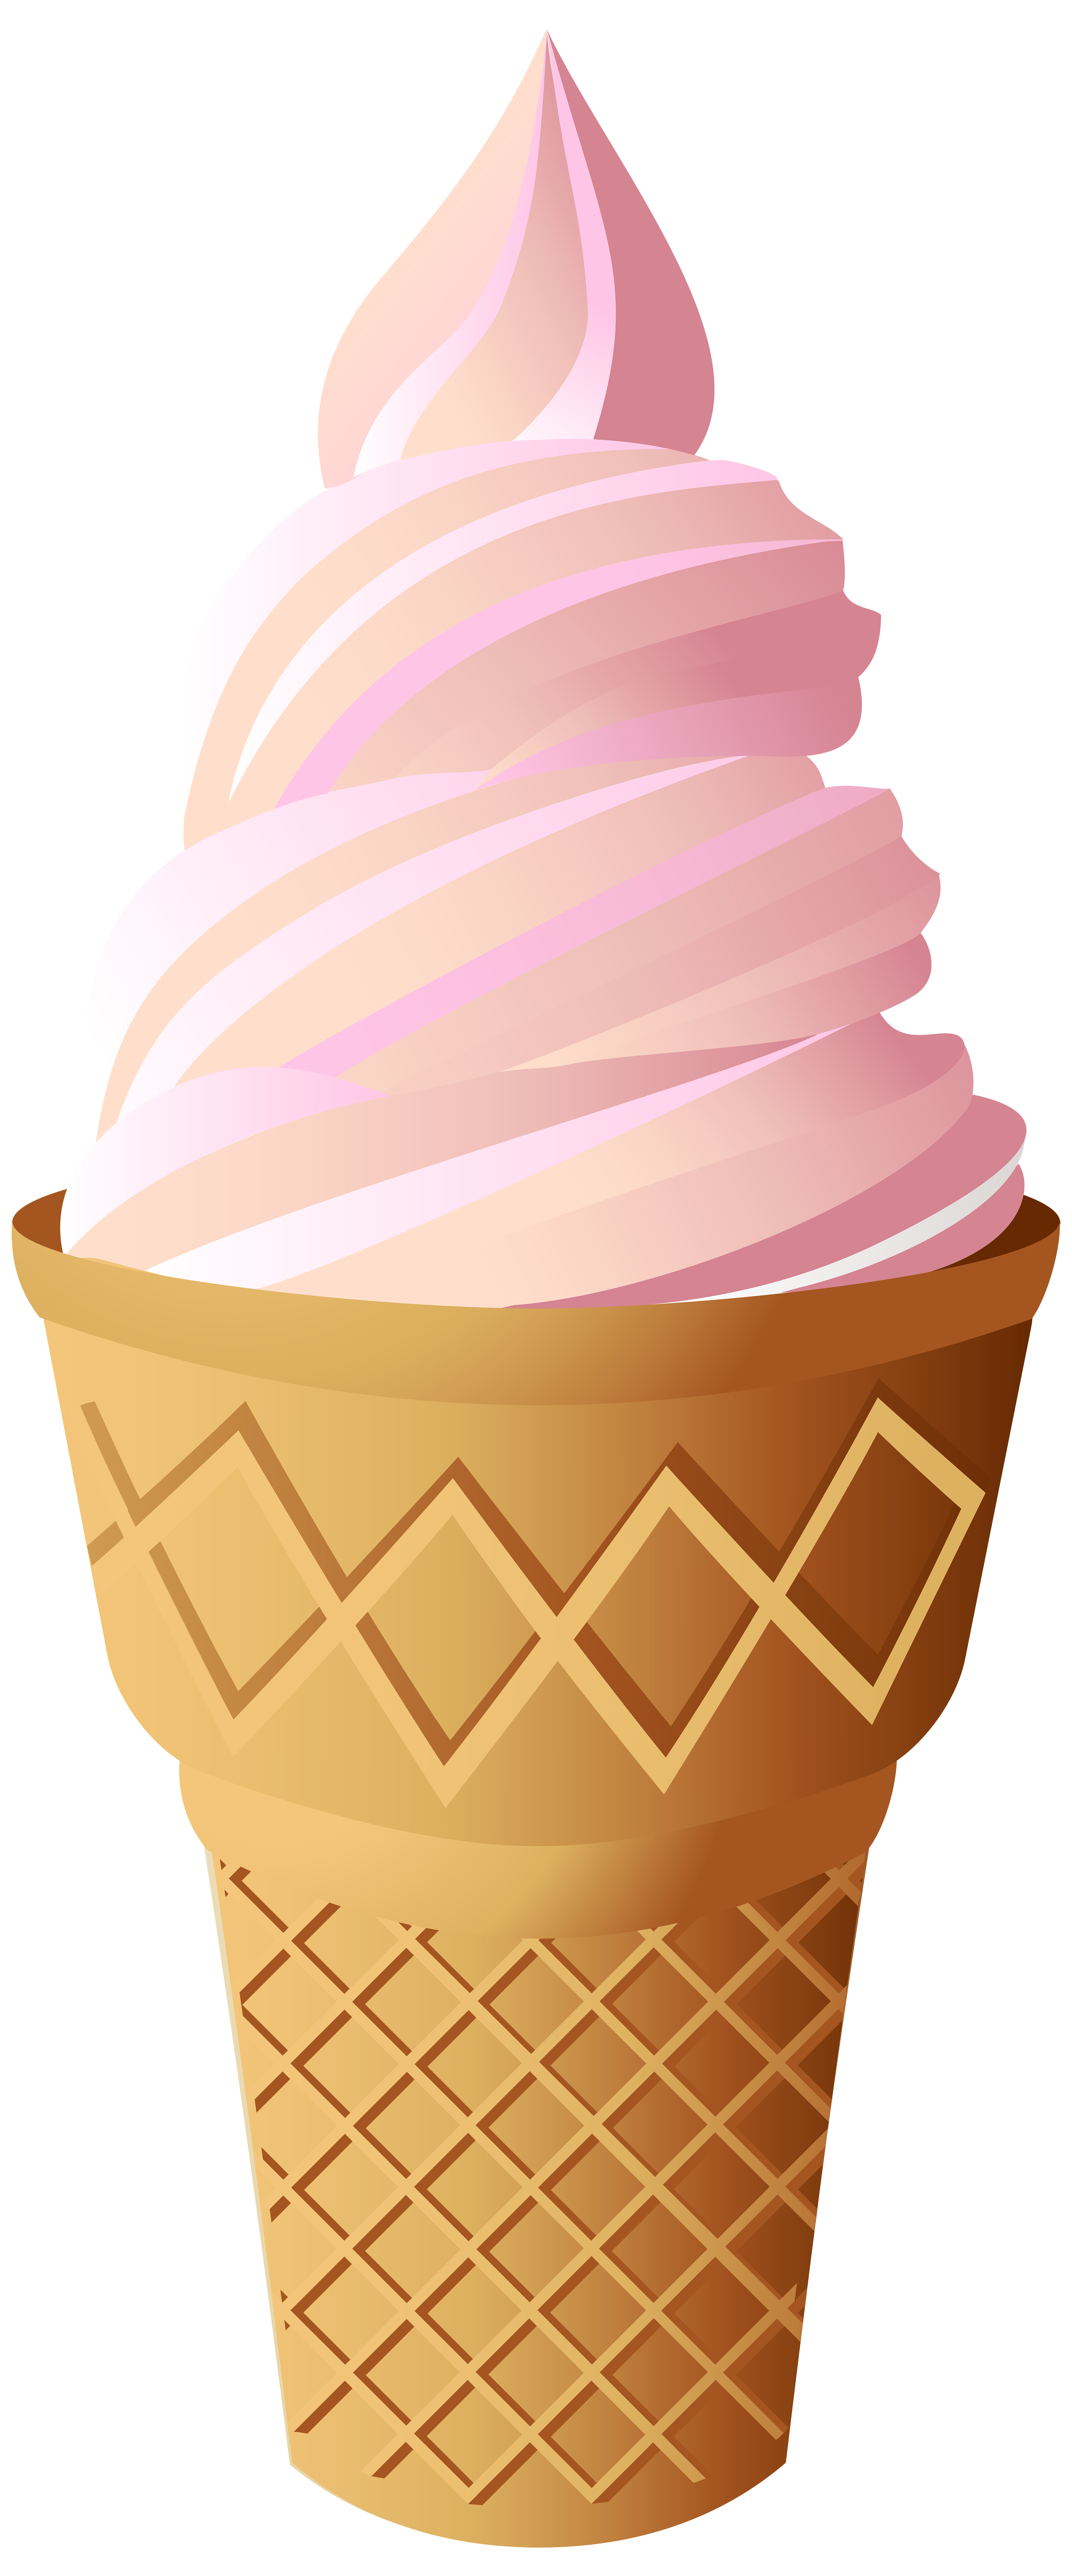 Pink ice cream.